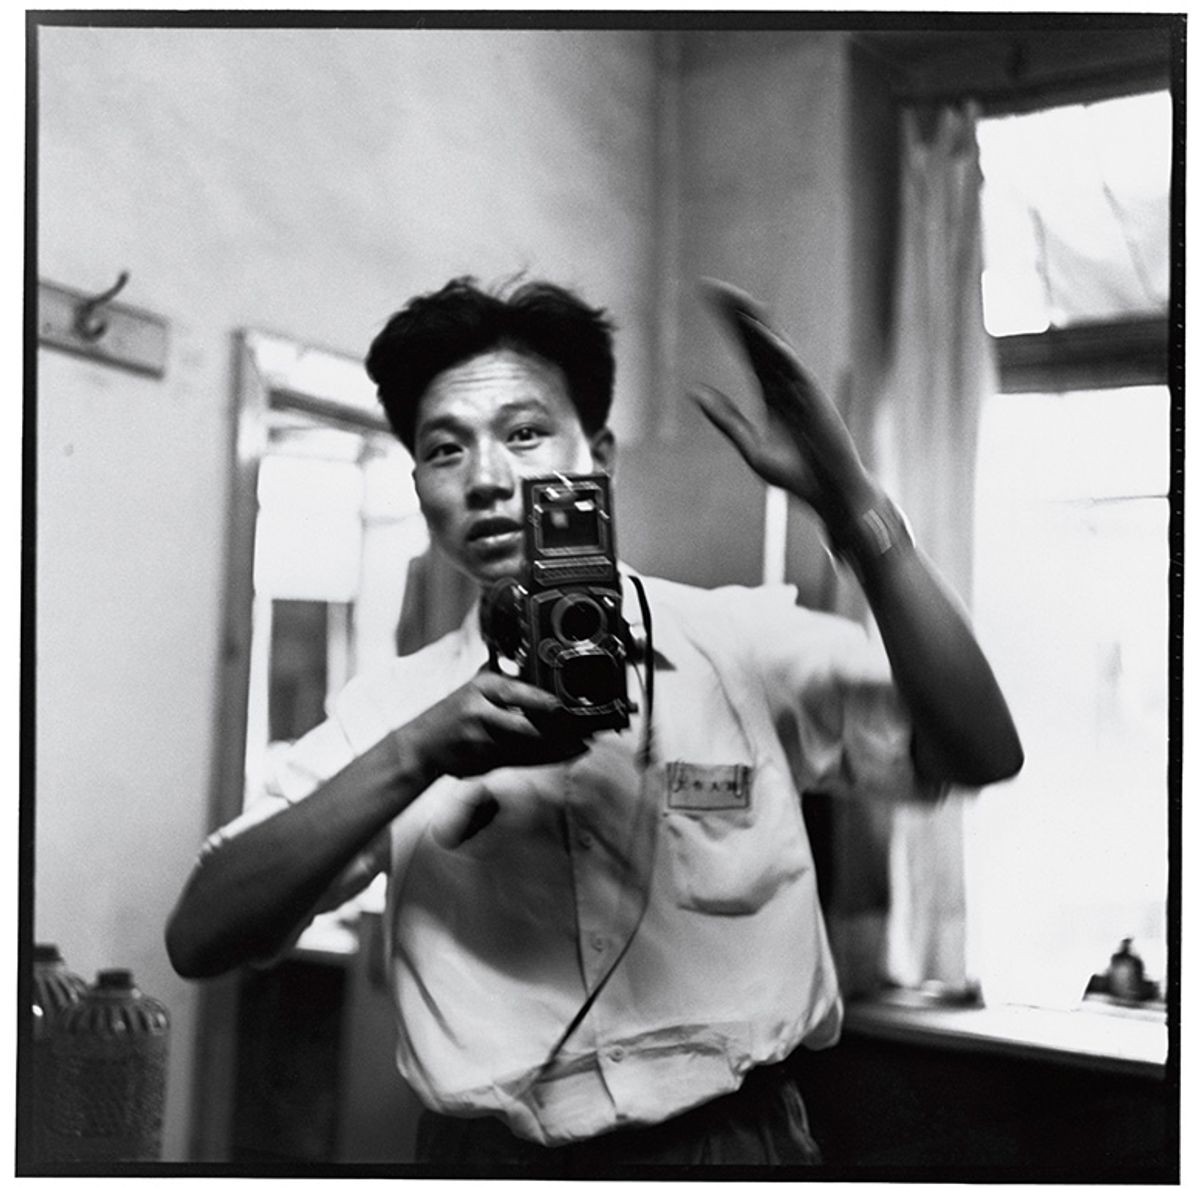 Self-portrait in the mirror, Harbin, July 1967 Credit: Li Zhensheng/Contact Press Images